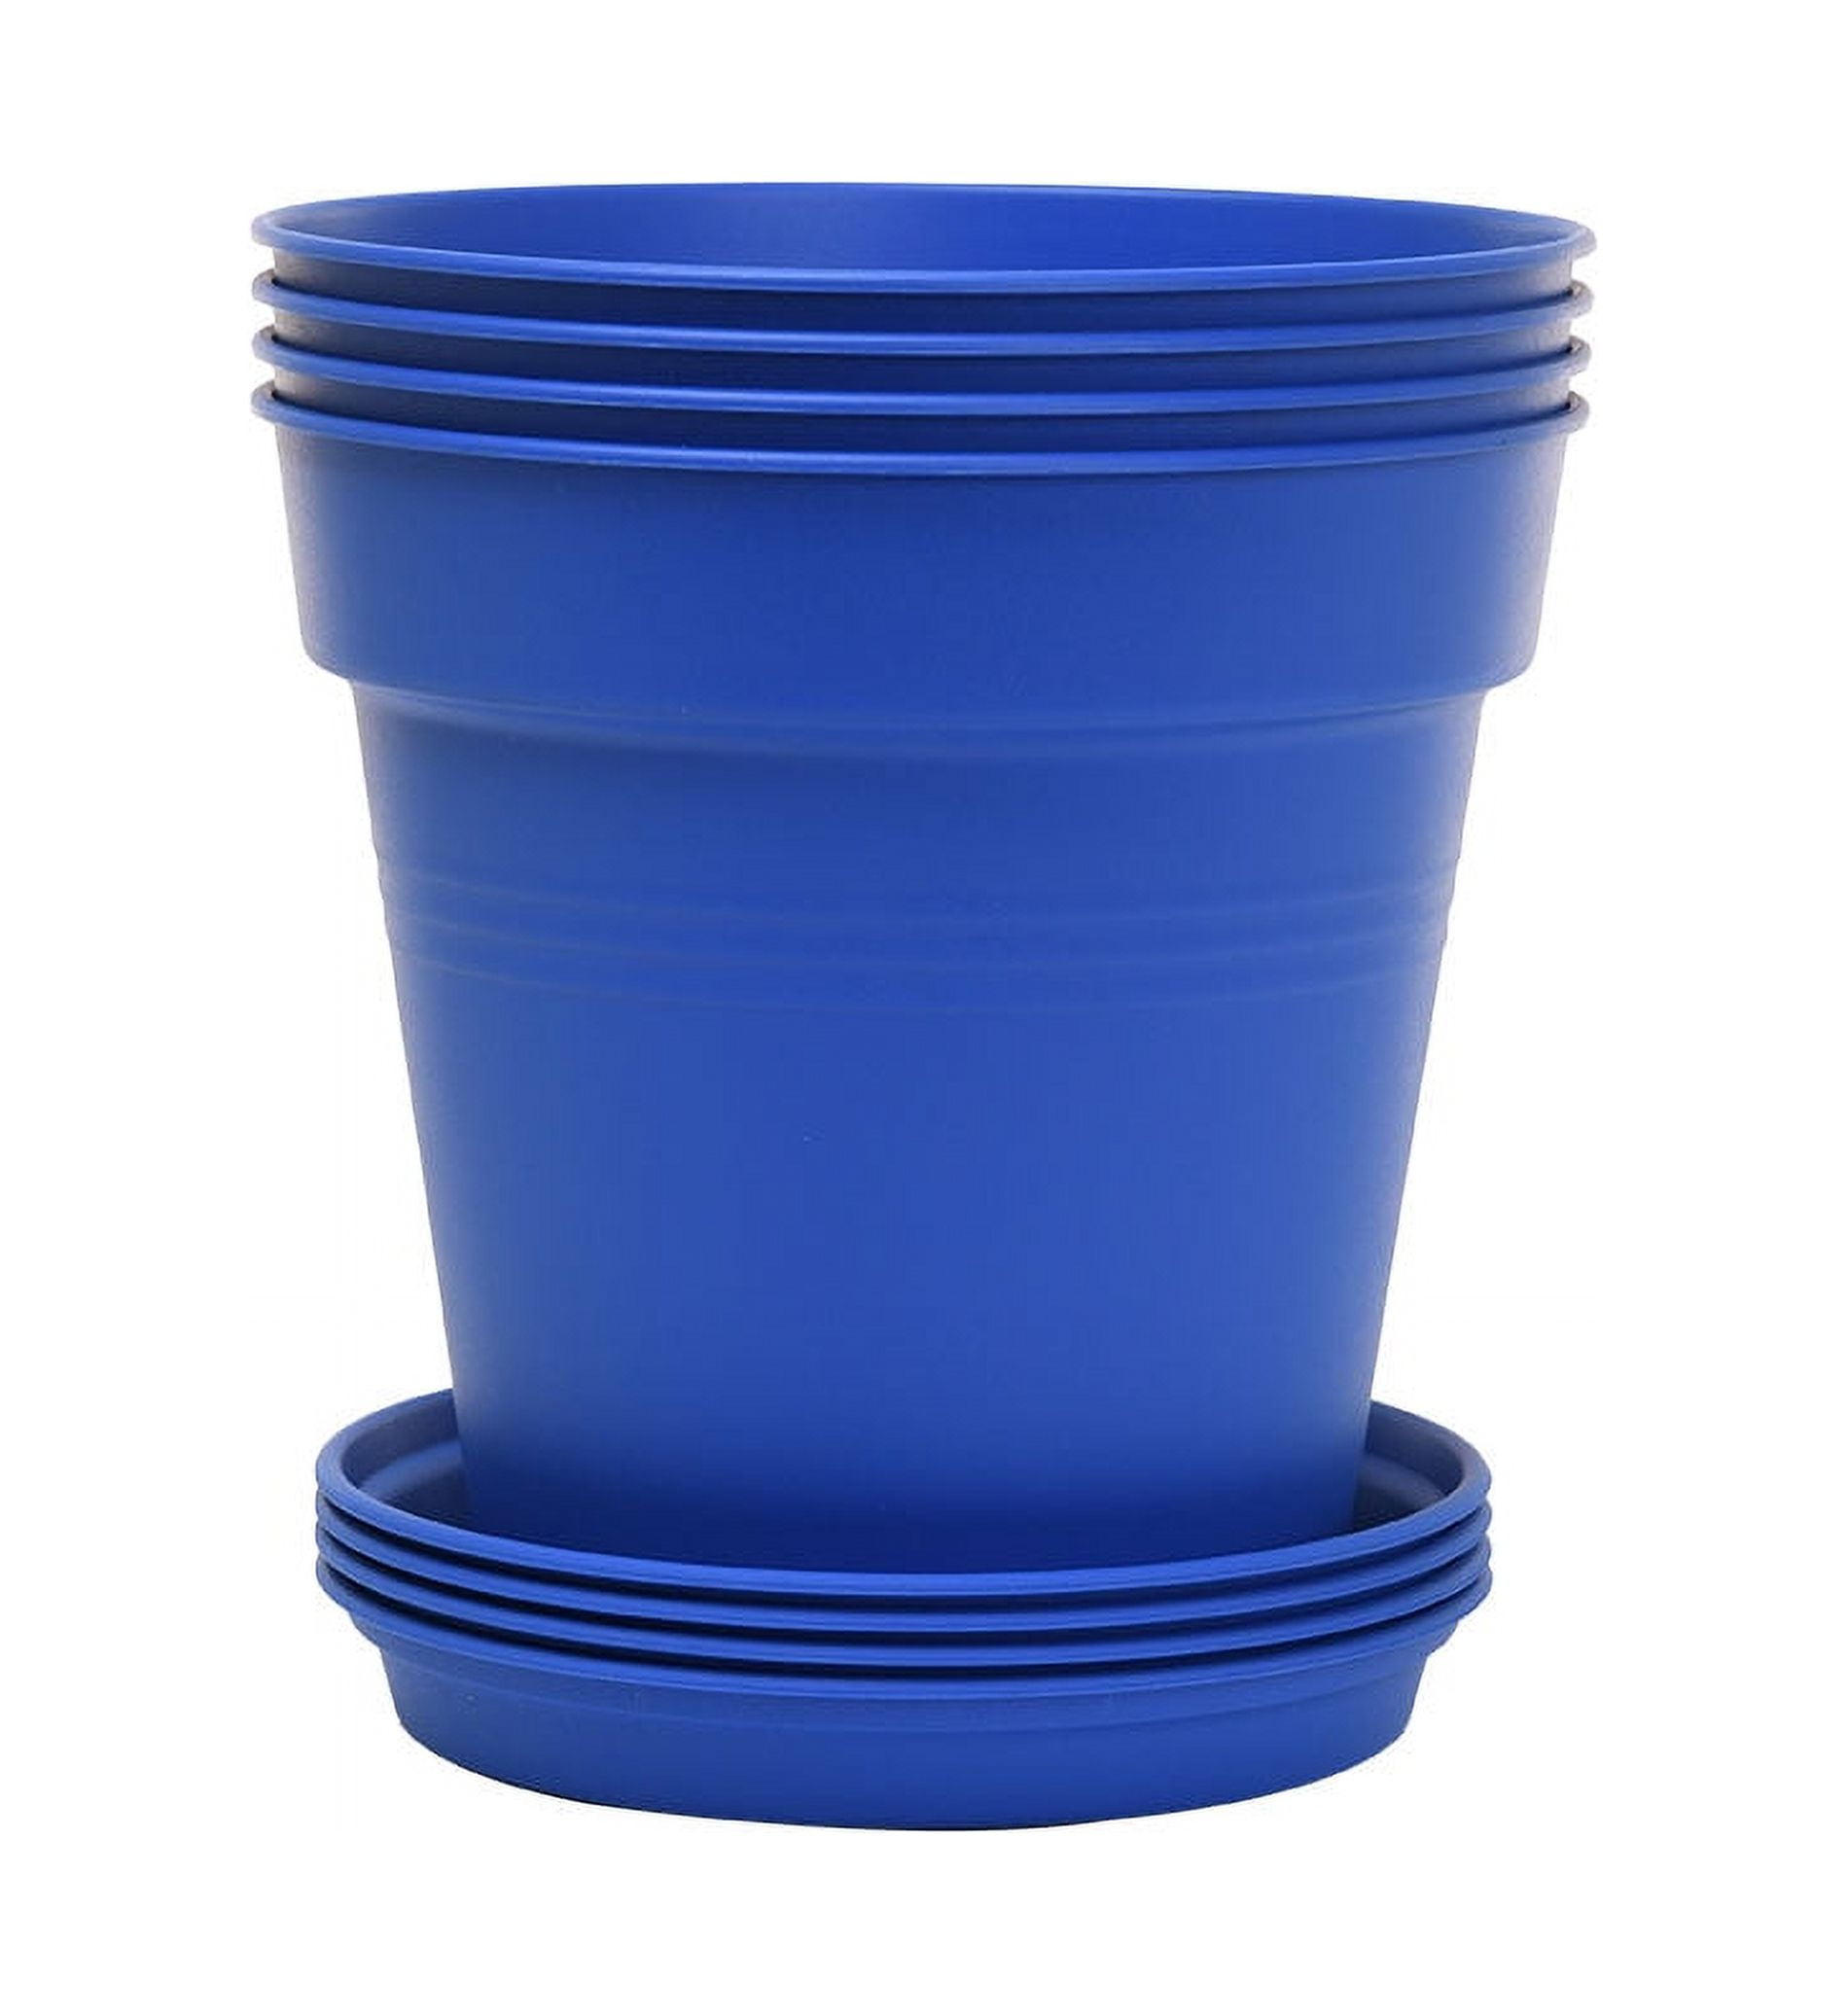 Mintra Home Garden Pots - Round Pot 8.5inch, Yellow